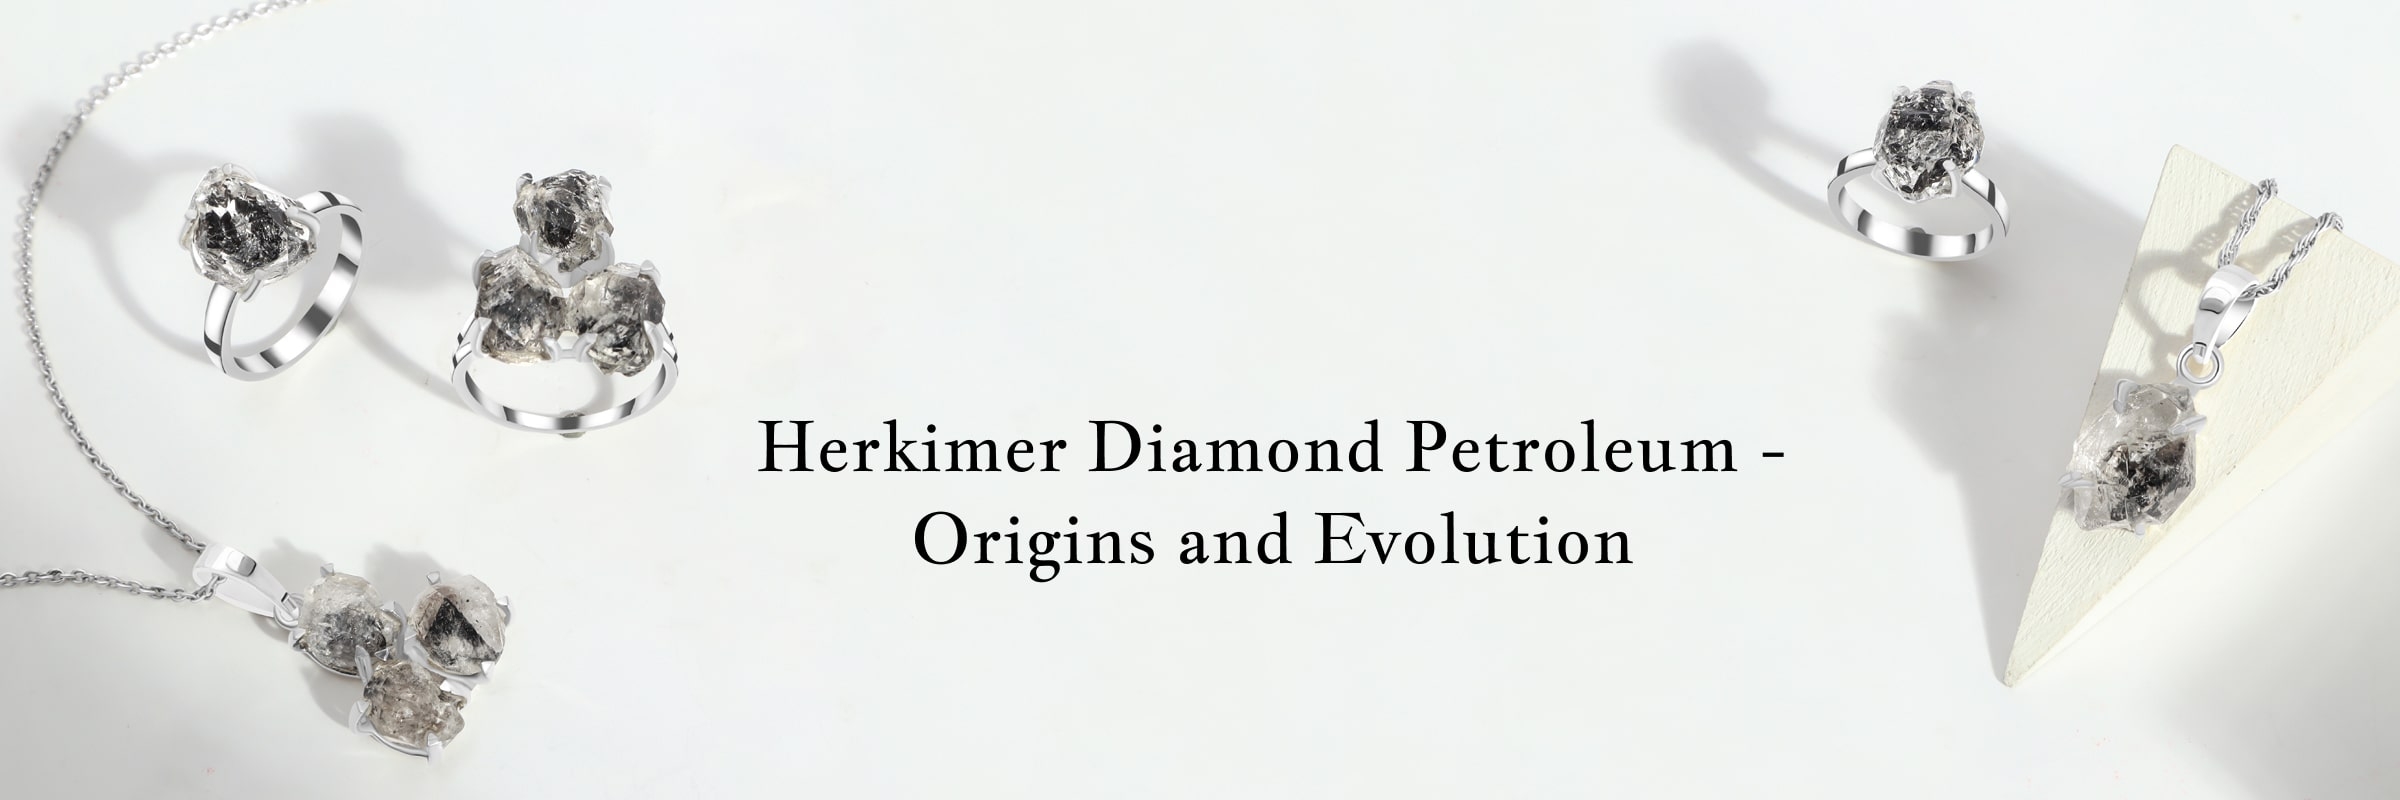 History of Herkimer Diamond Petroleum Gemstone